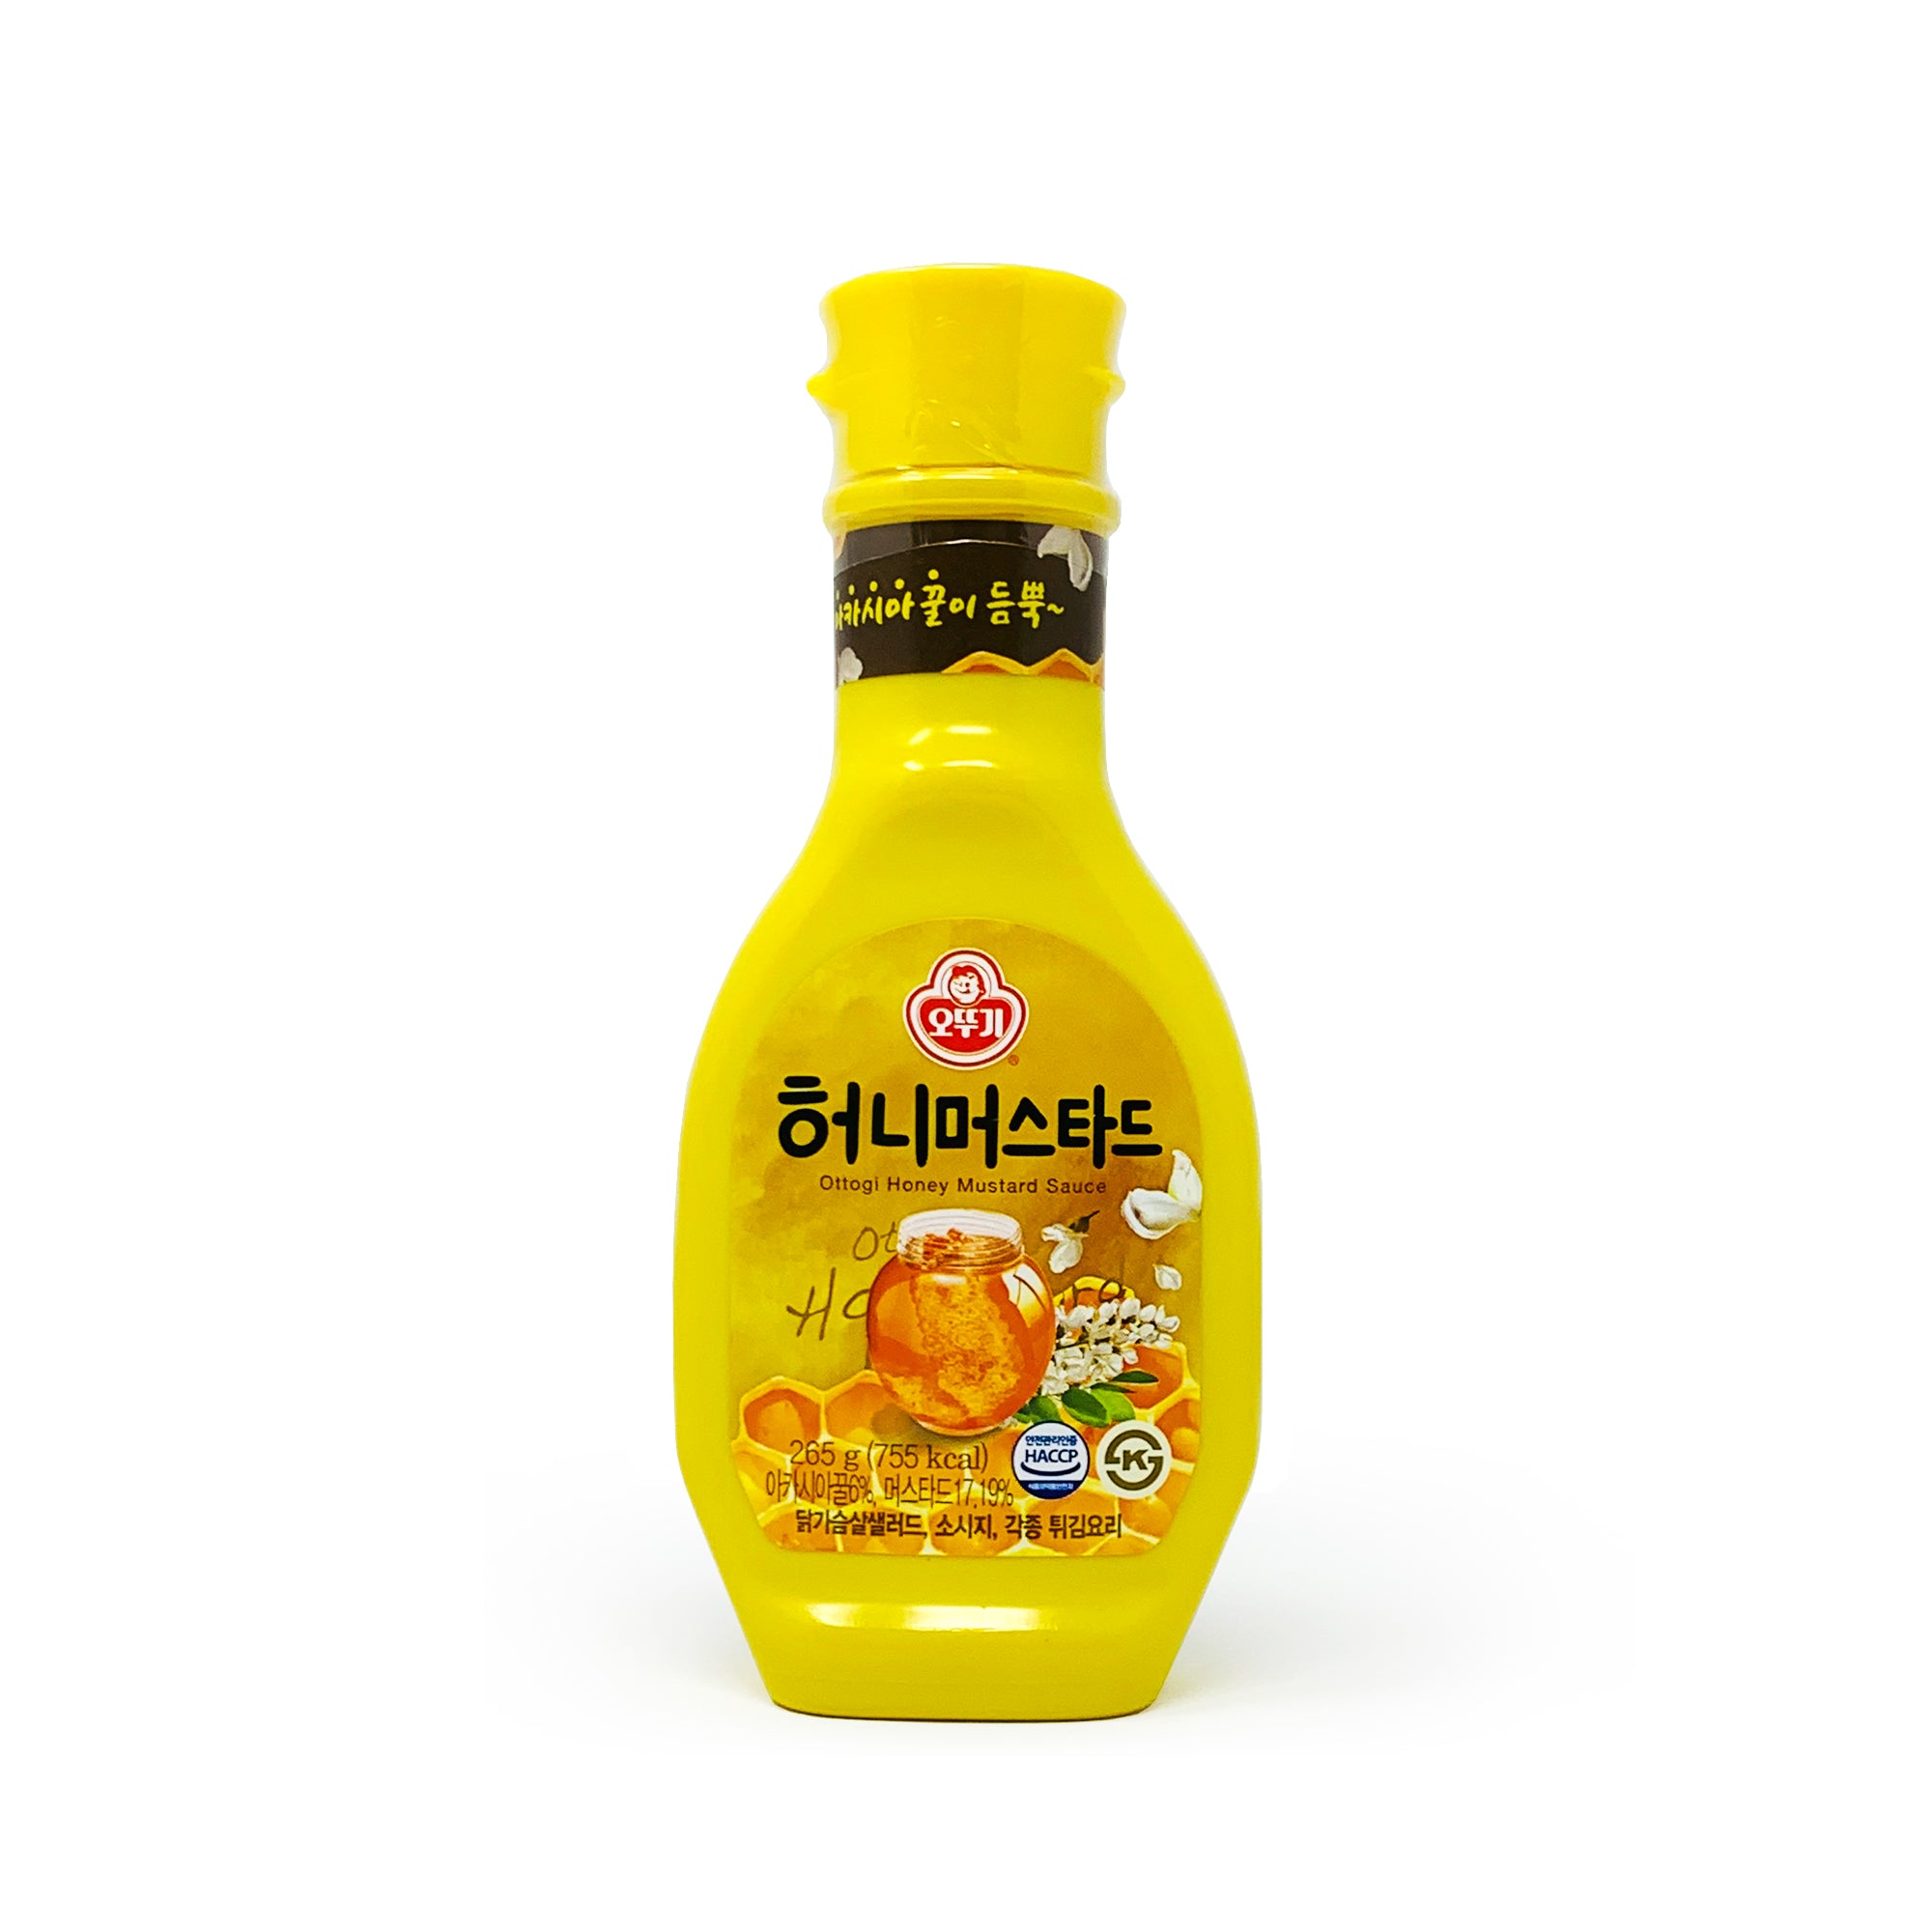 Honey Mustard Sauce 265g